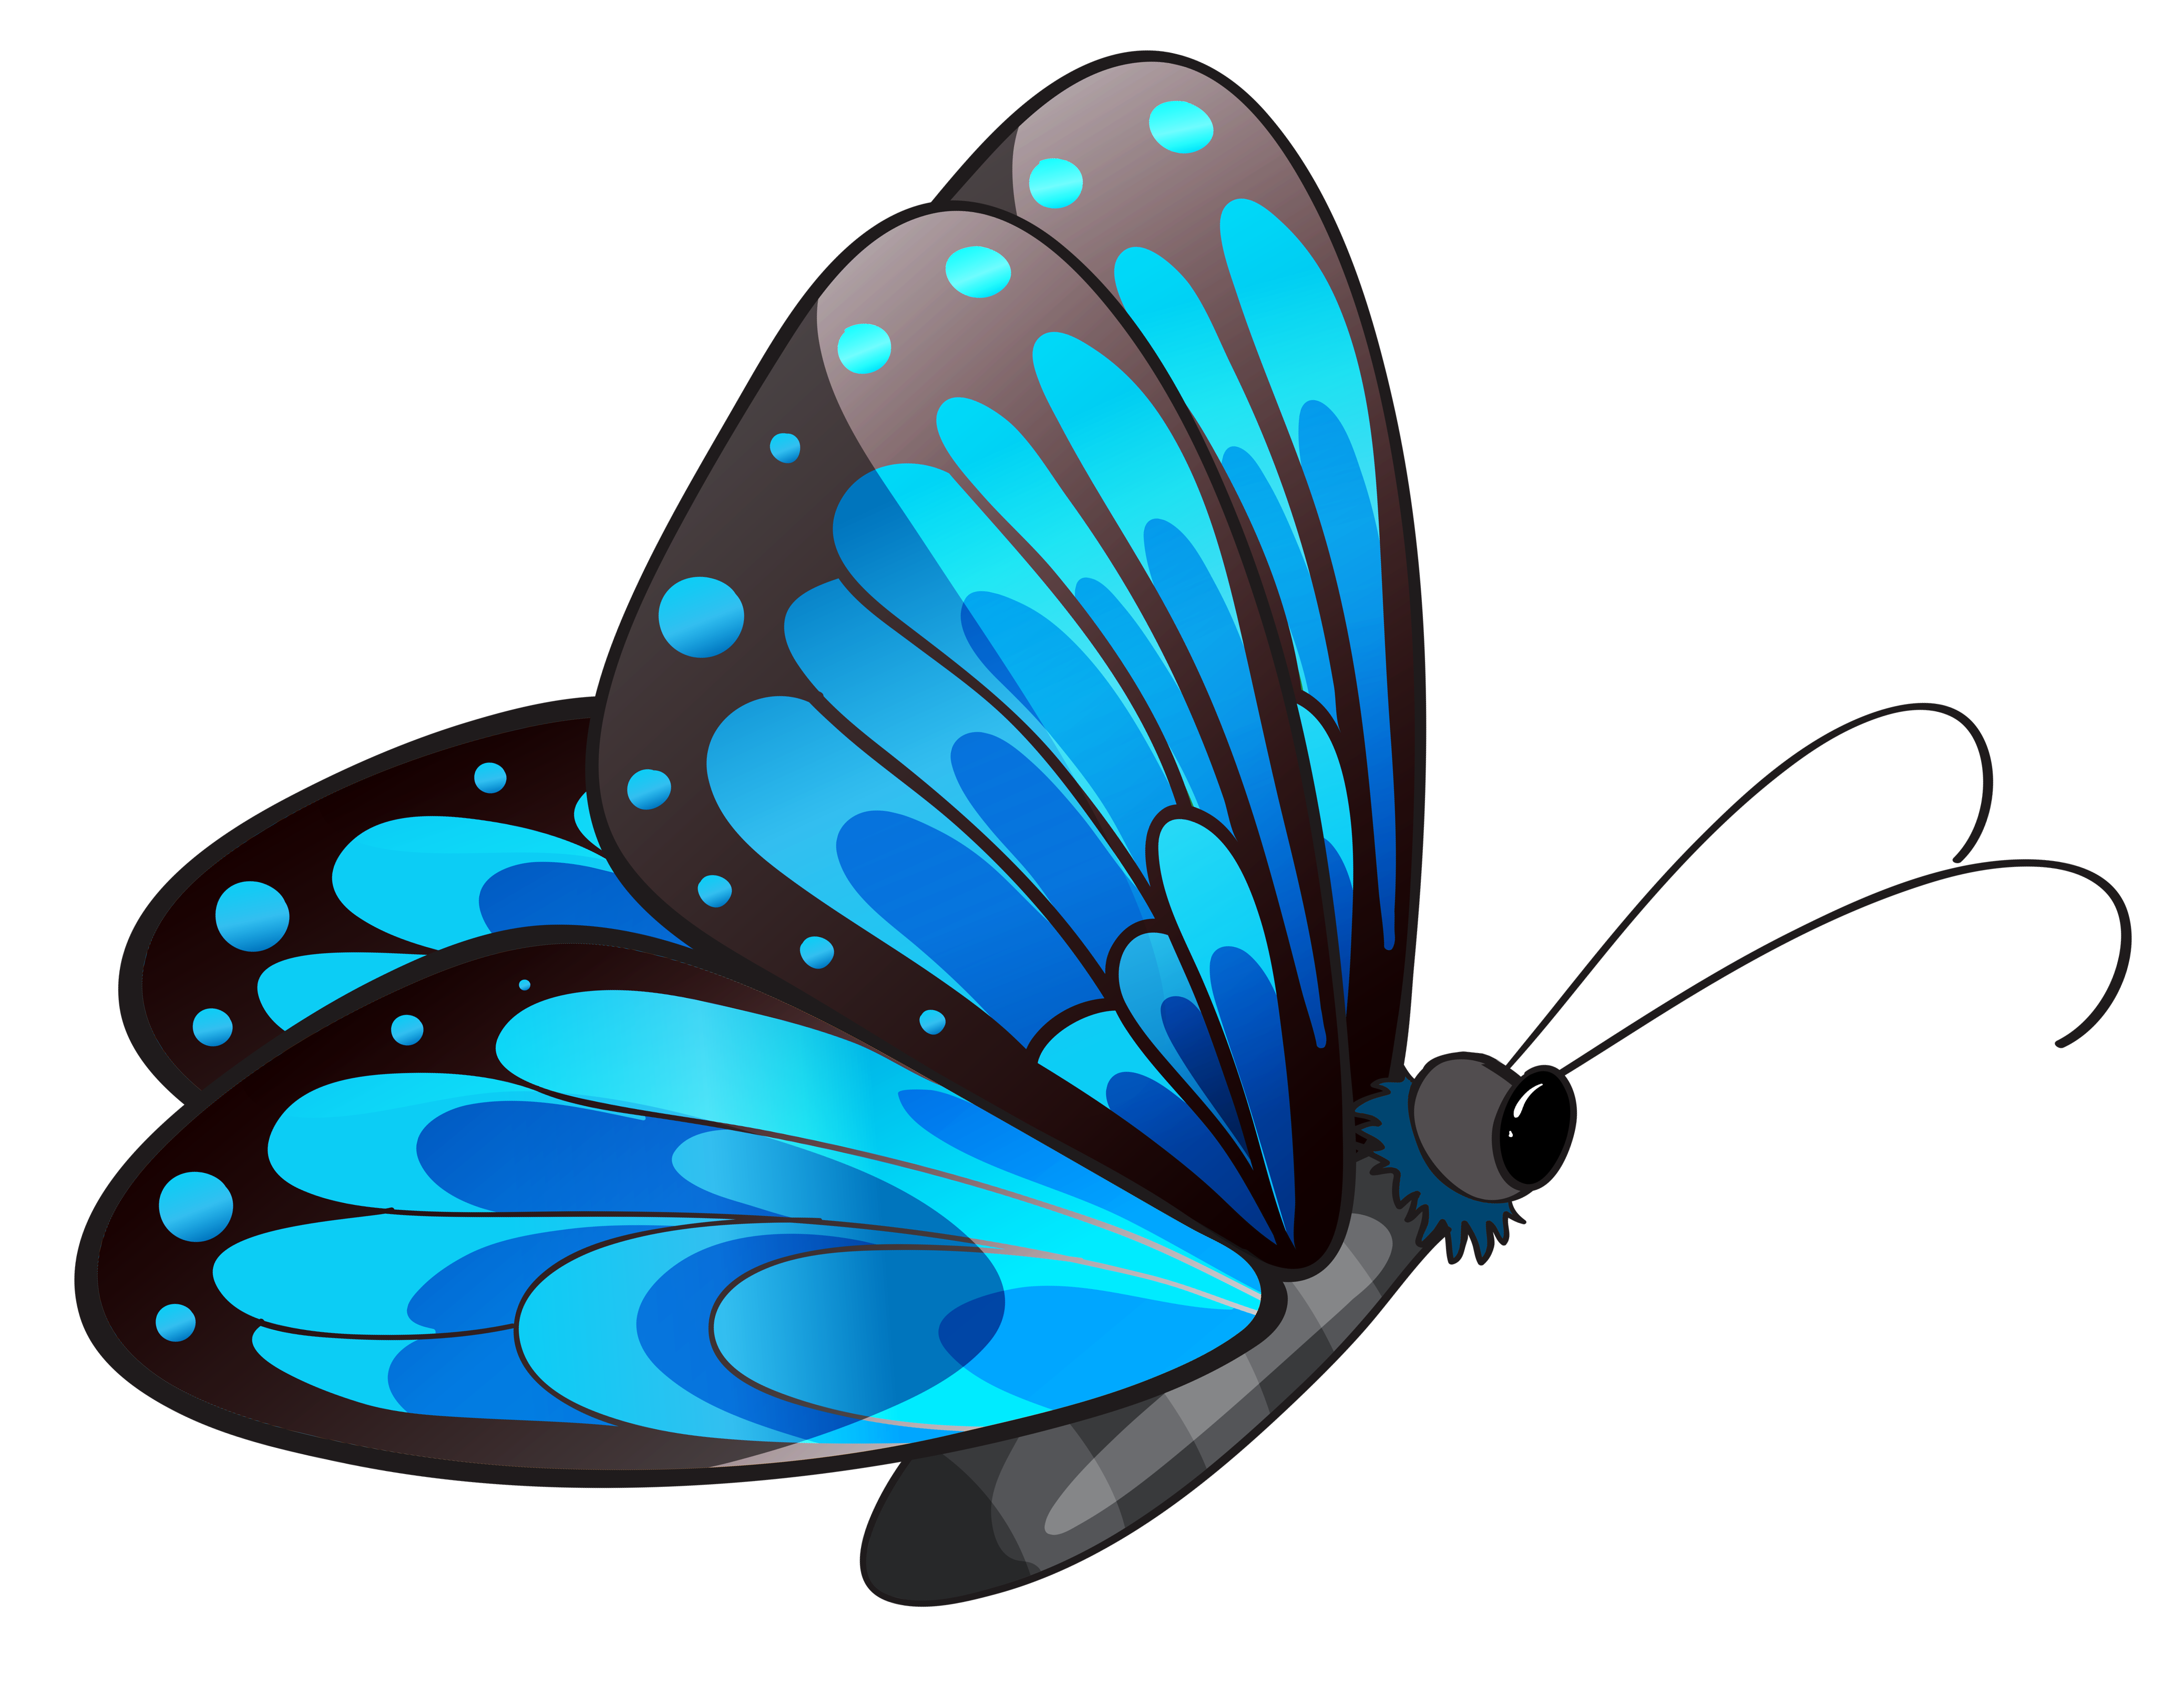 Butterfly Clip art